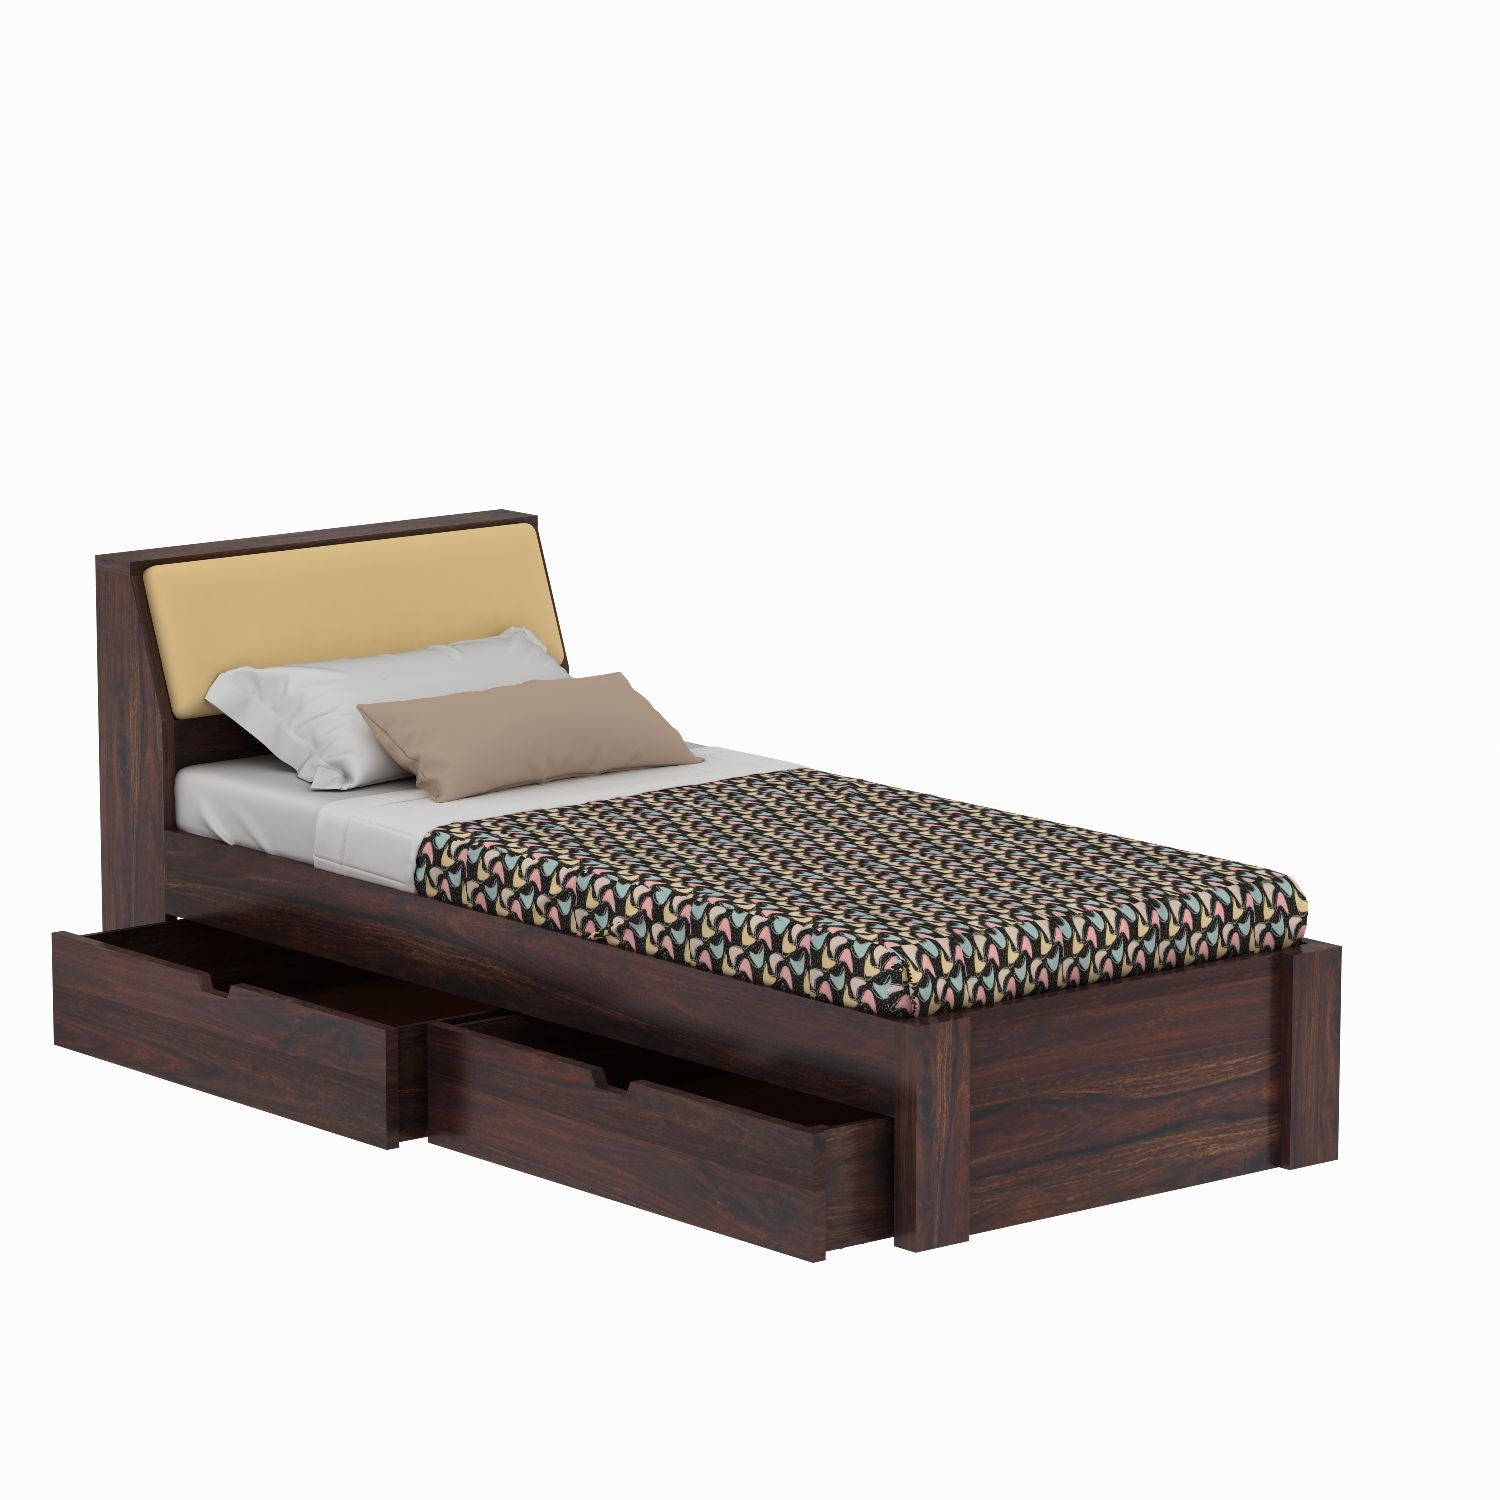 Rubikk Solid Sheesham Wood Single Bed With Two Drawers (Walnut Finish)